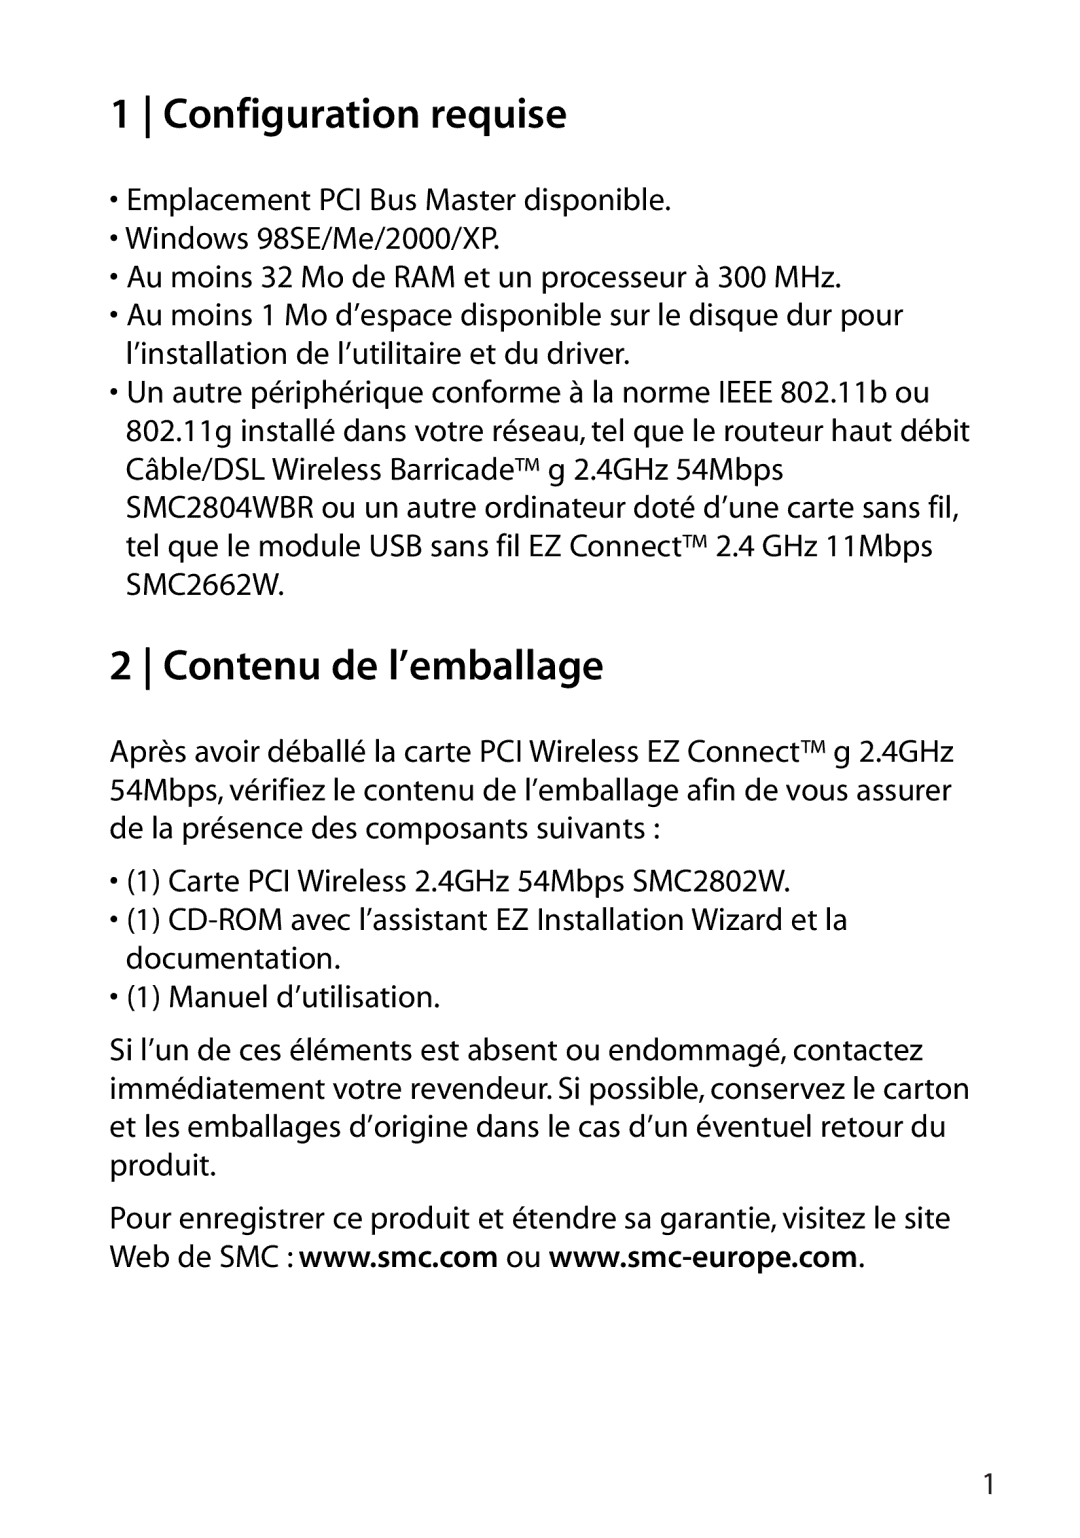 SMC Networks SMC2802W manual Configuration requise, Contenu de l’emballage 